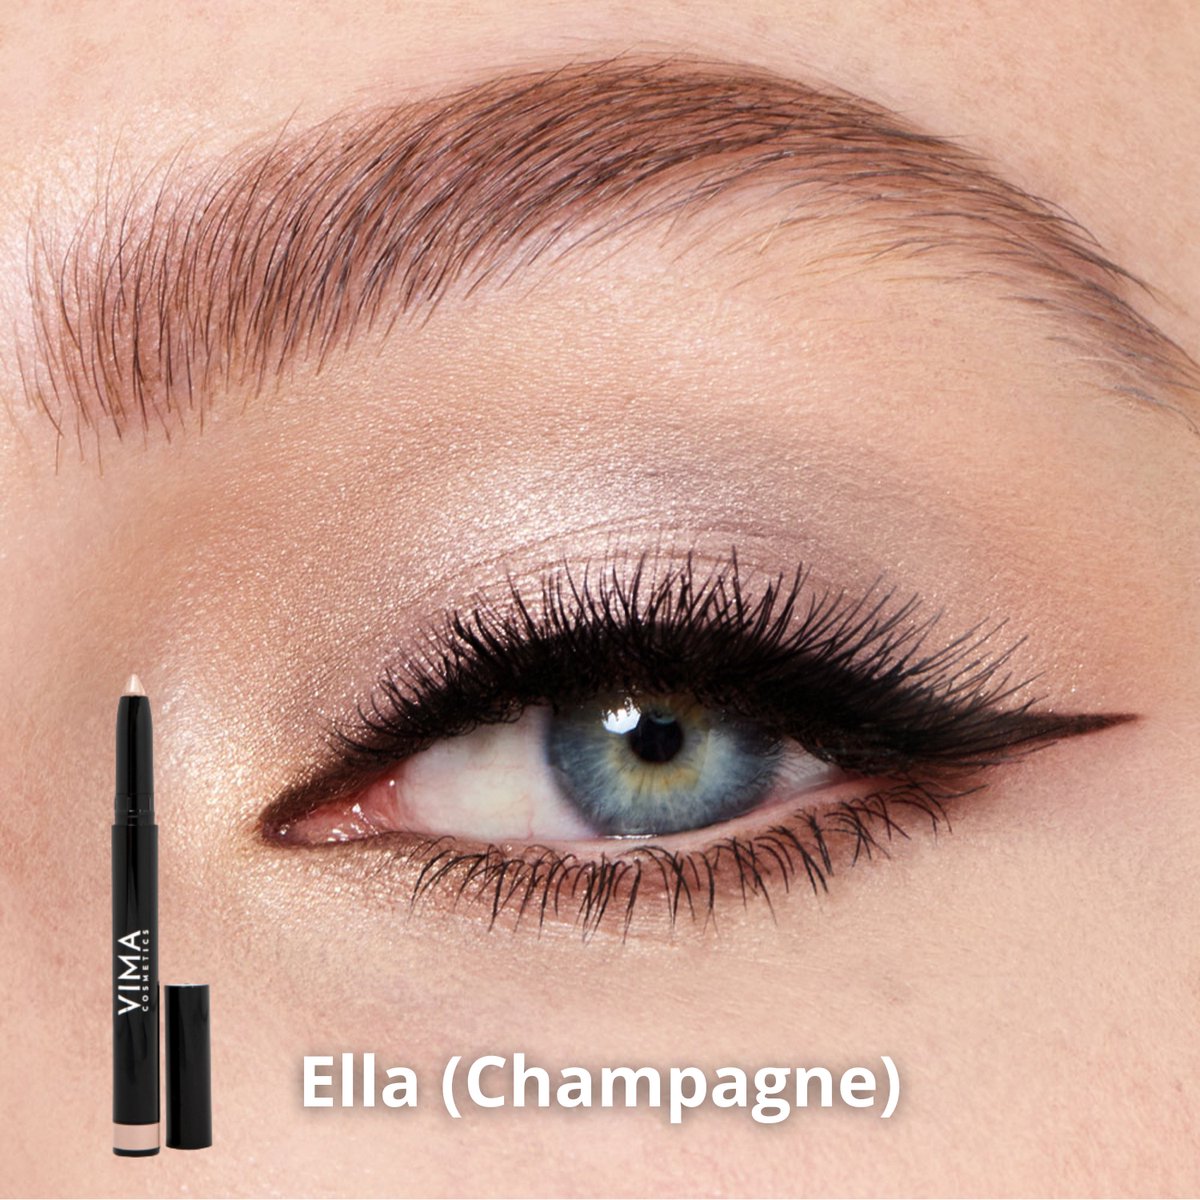 VIMA Eyeshadow stick - Champagne (Ella) - Long-Lasting - High Pigmentation - Waterproof